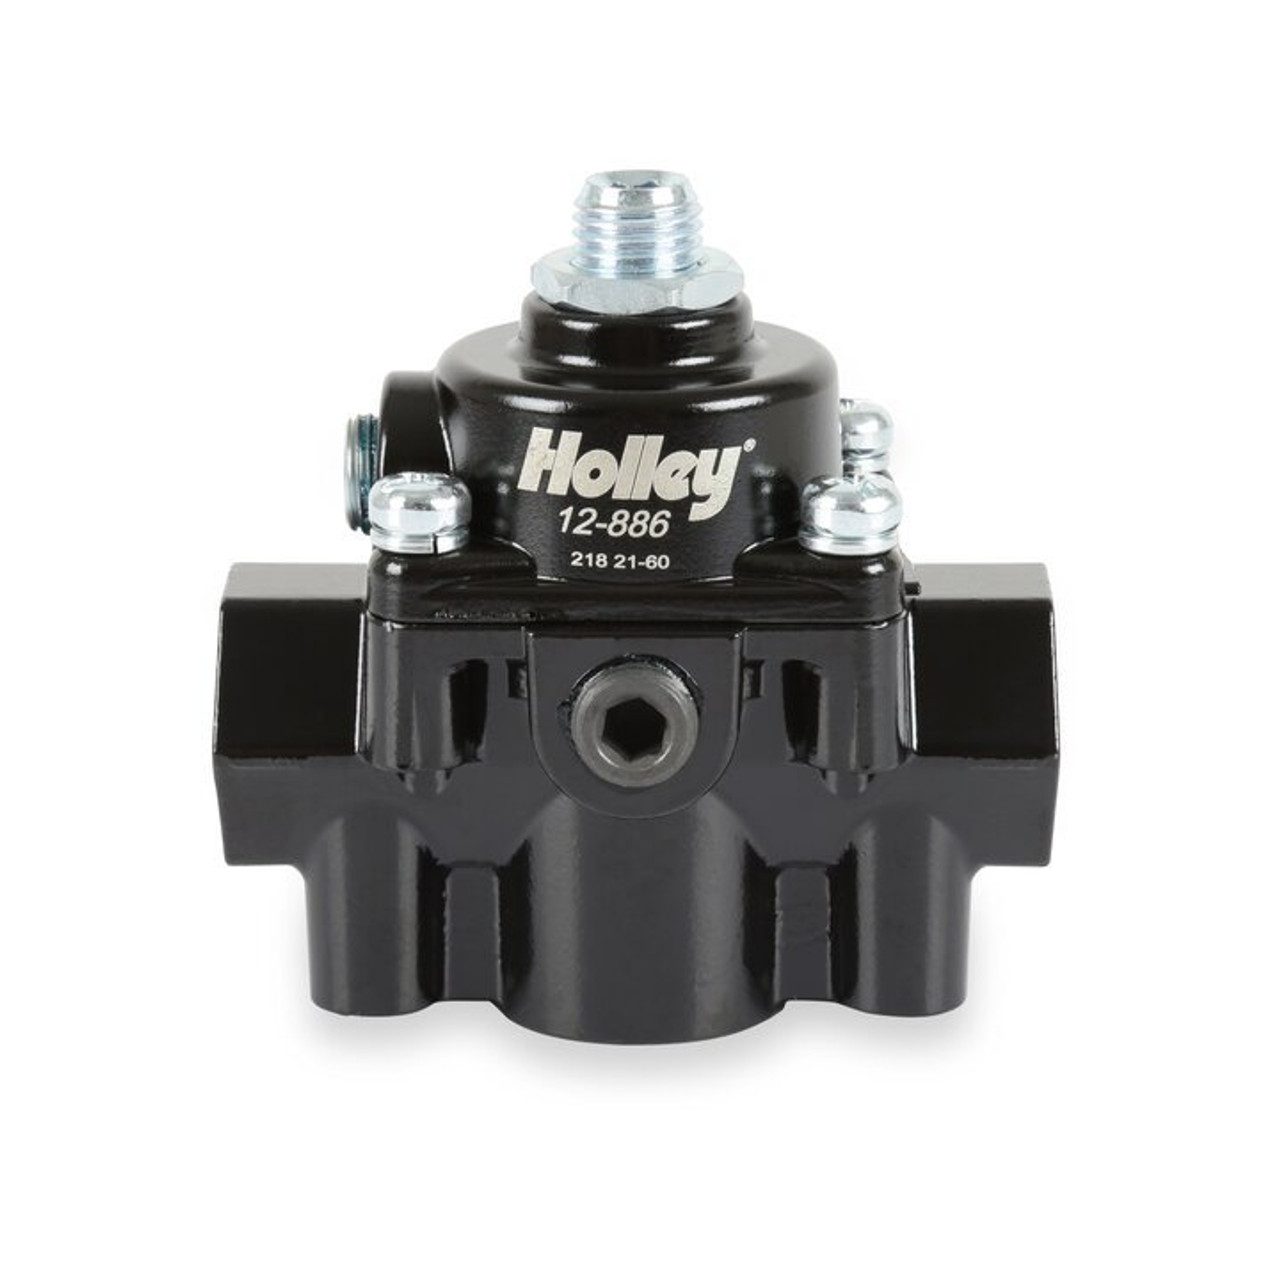 Holley EFI Bypass Fuel Pressure Regulator Kit 12-886Kit (15-60 psi)